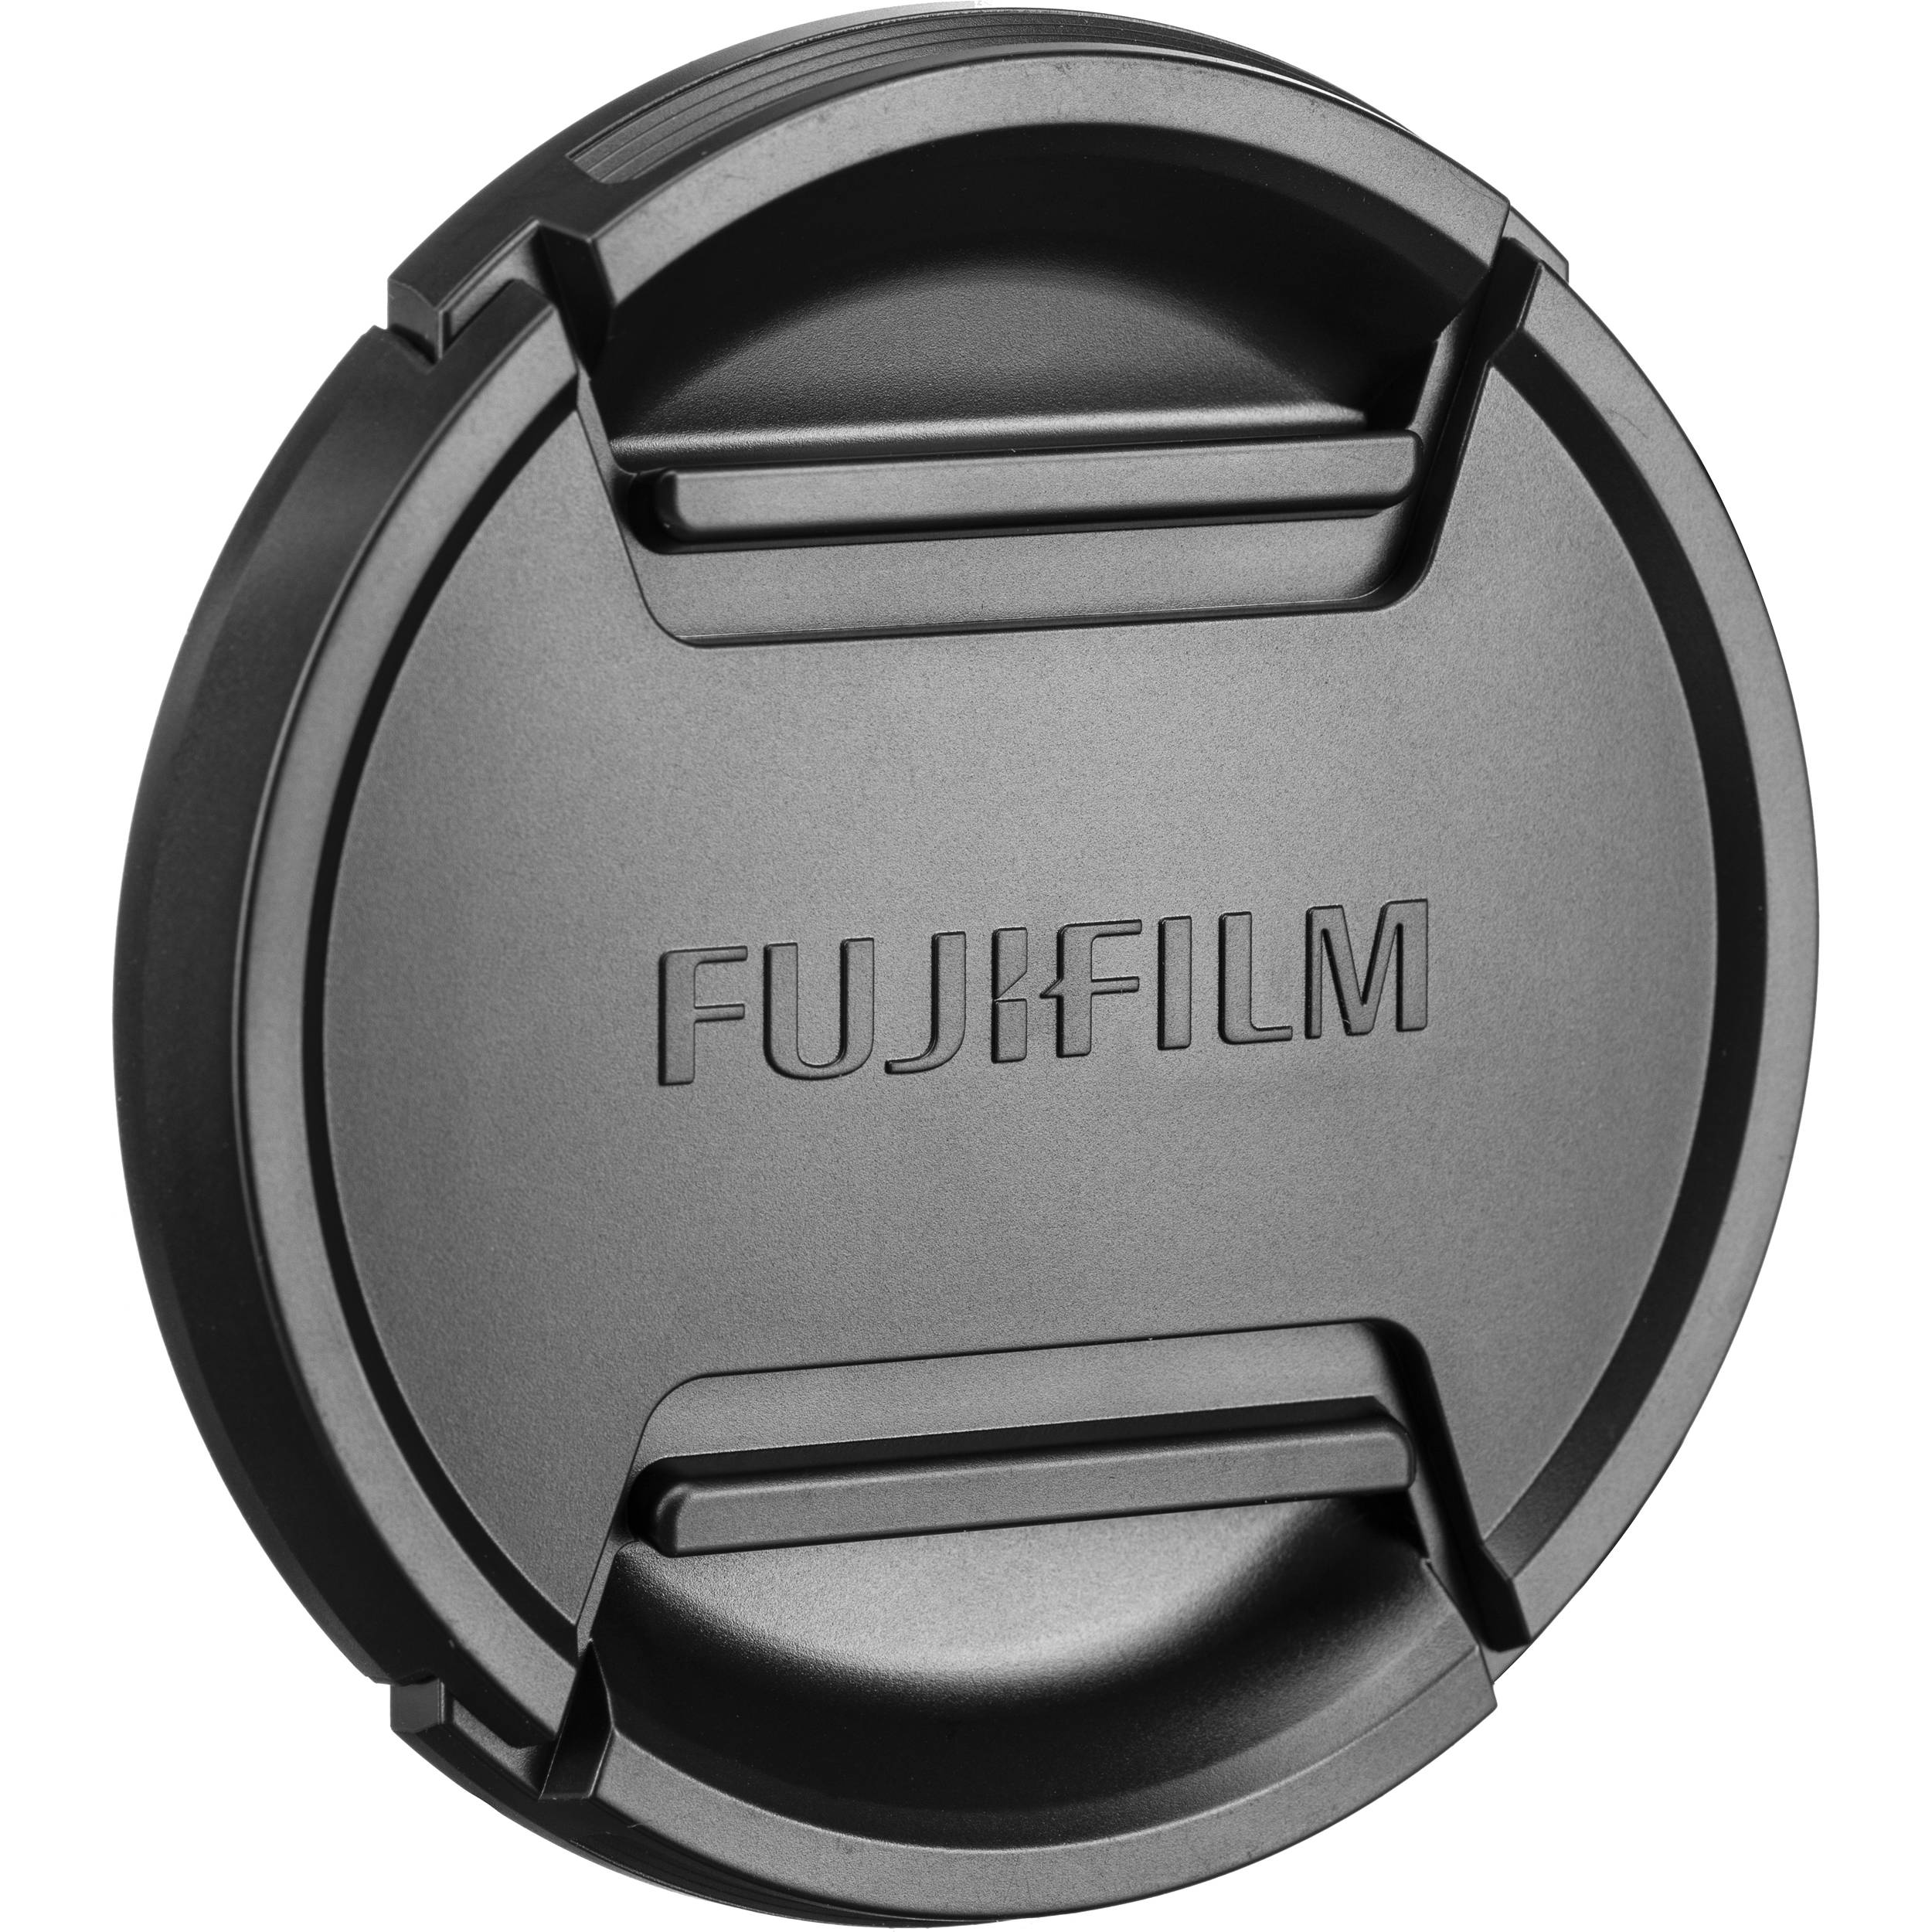 FUJIFILM 43mm Lens Cap Fujifilm Front Lens Cap